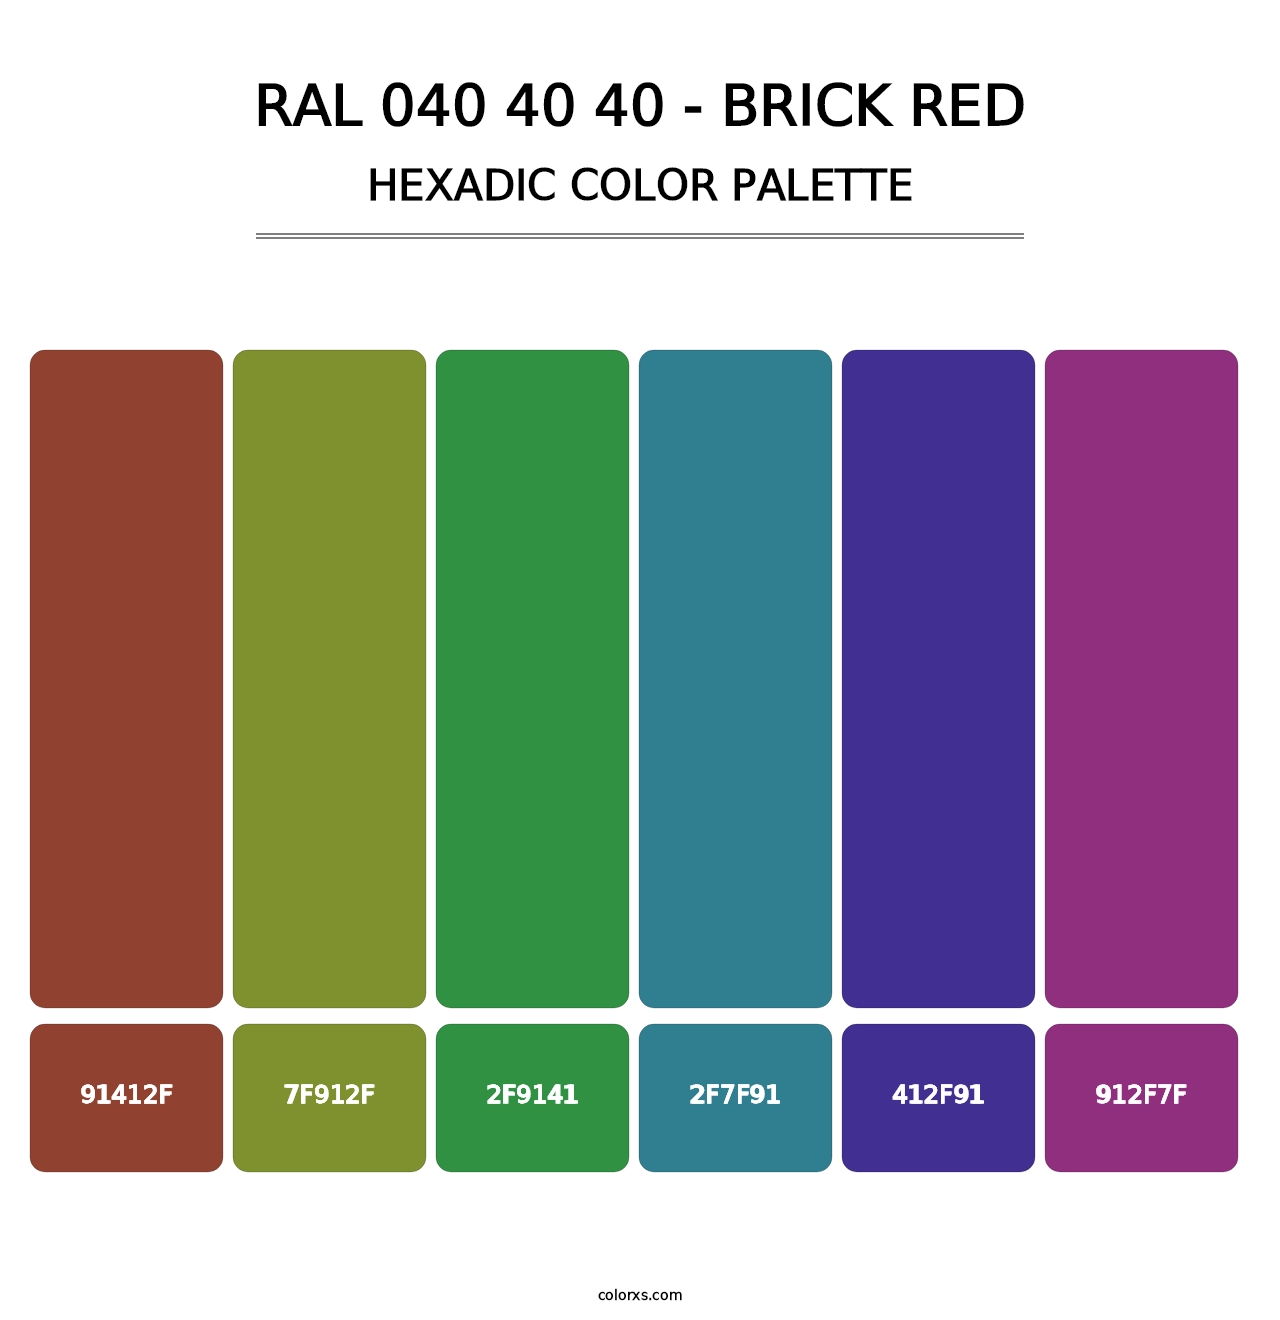 RAL 040 40 40 - Brick Red - Hexadic Color Palette